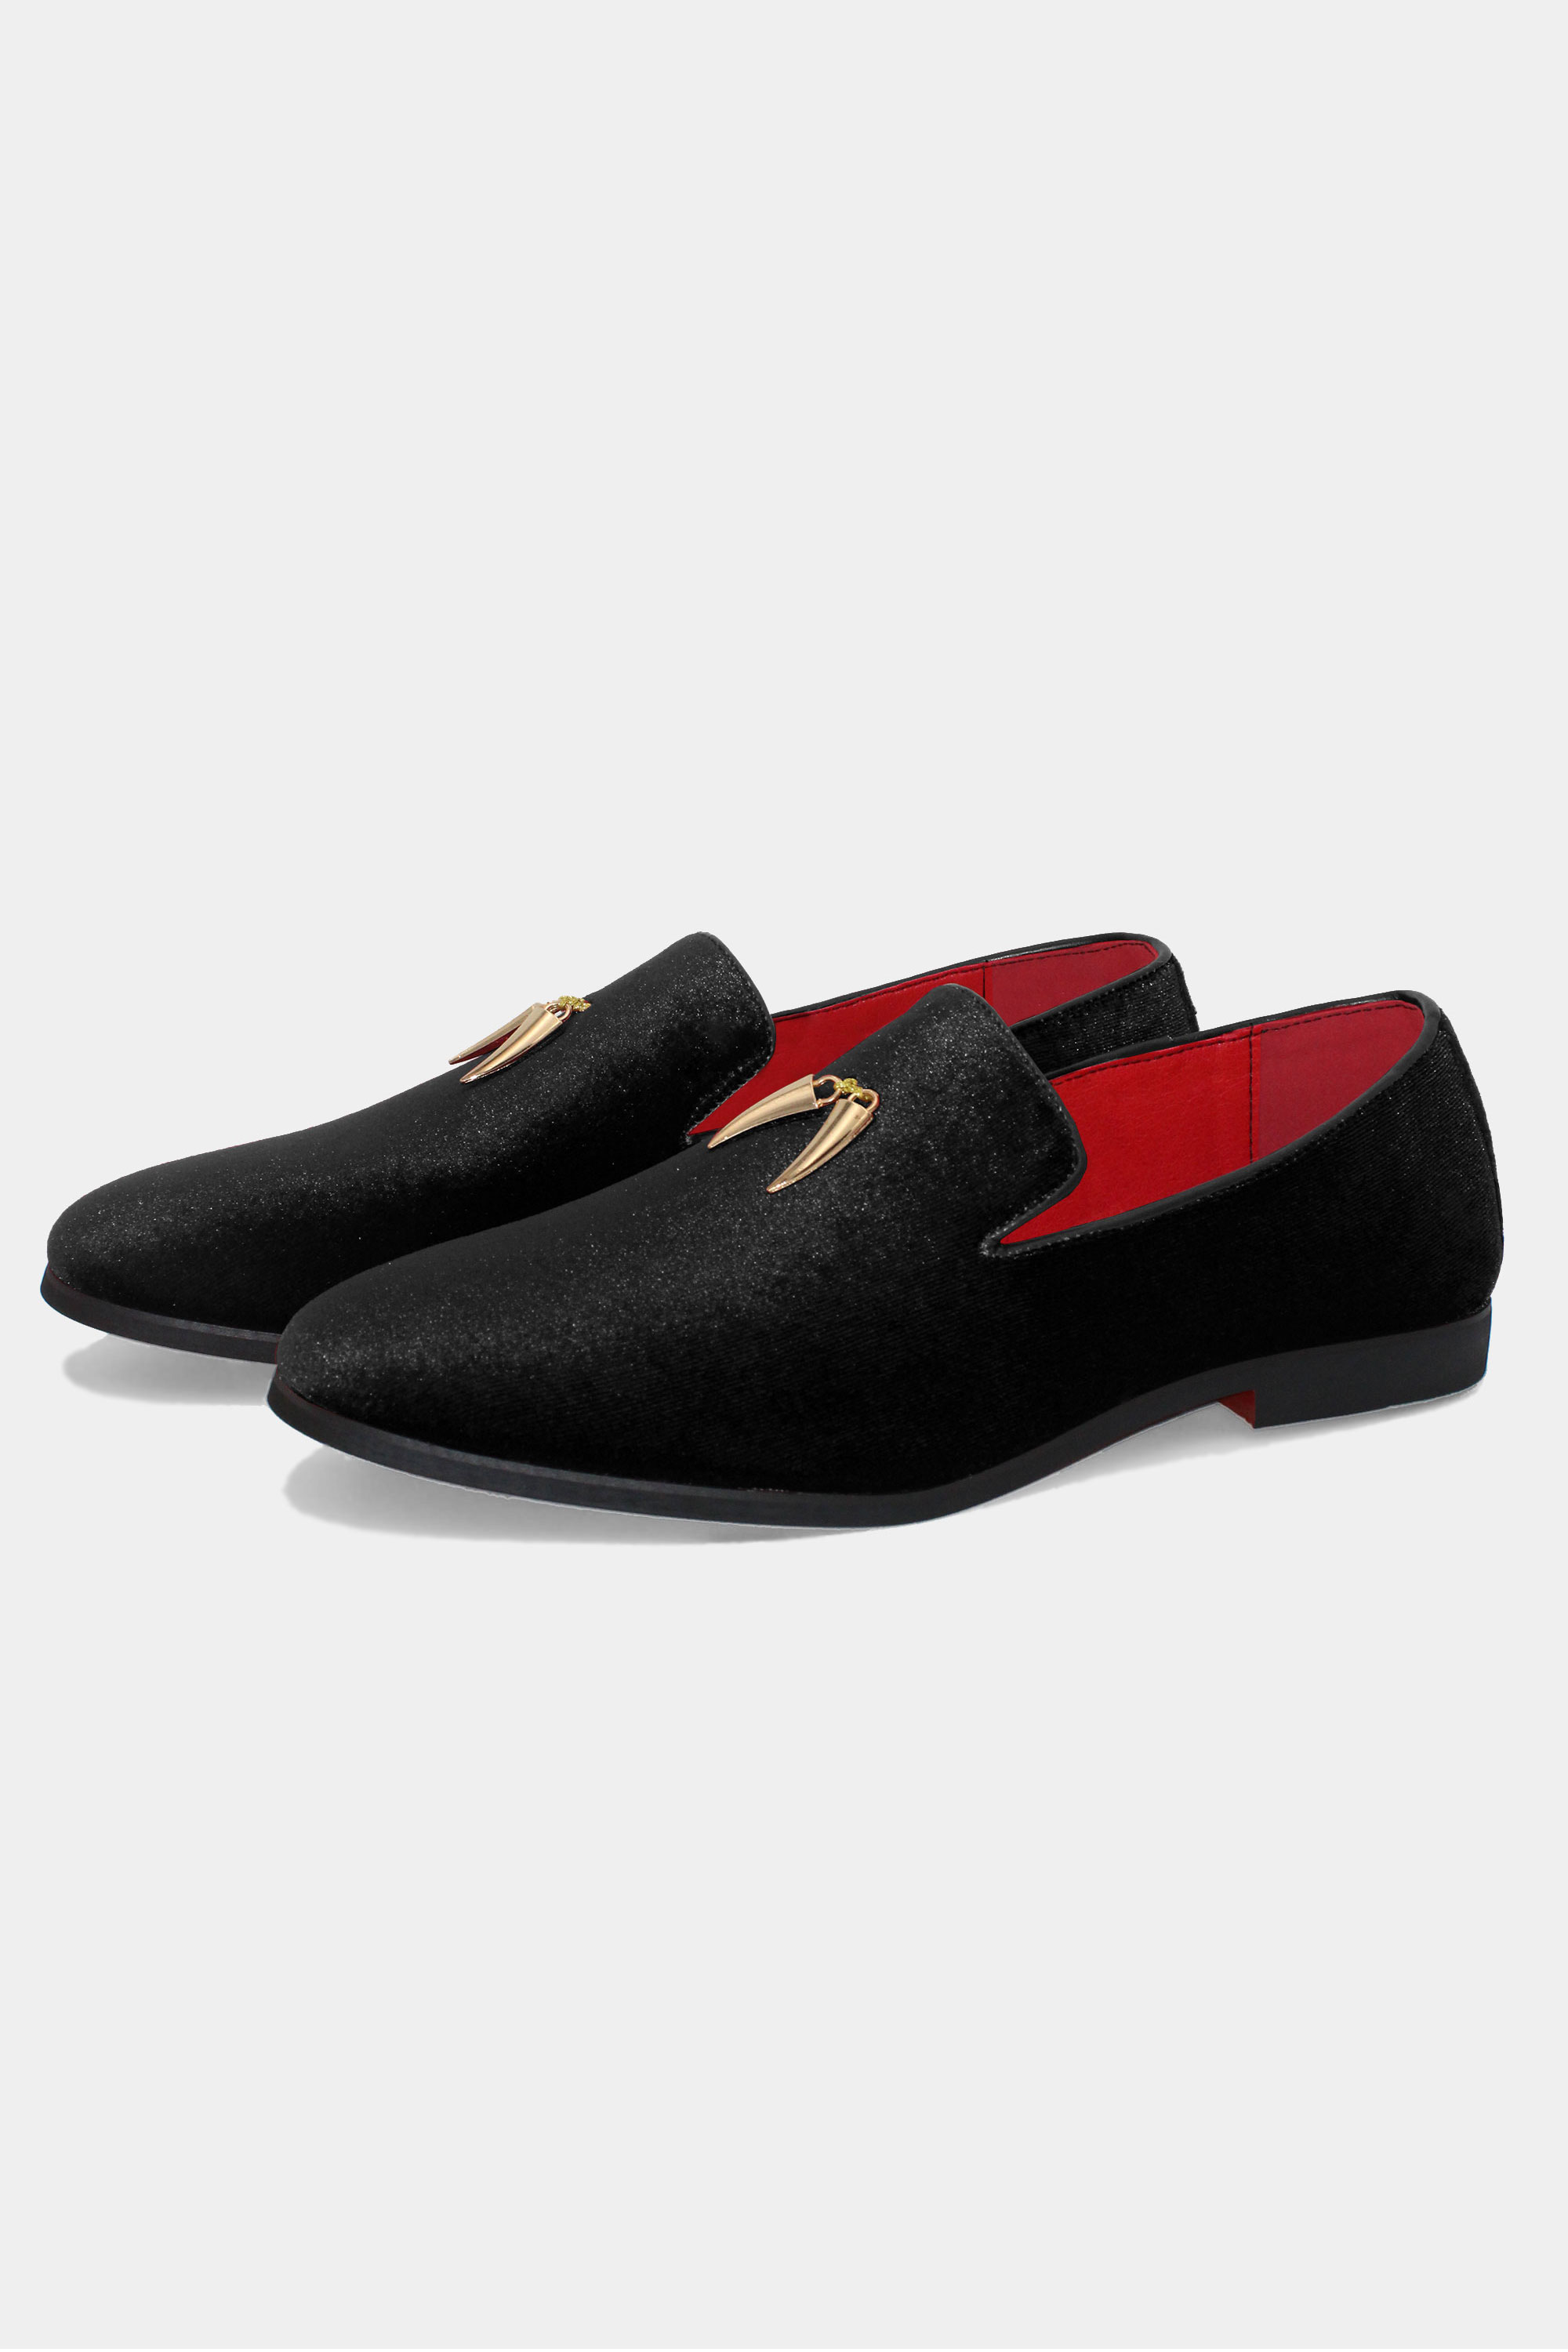 brug mangel Støt Men's Black Velvet Loafers Shoes | Gentleman's Guru